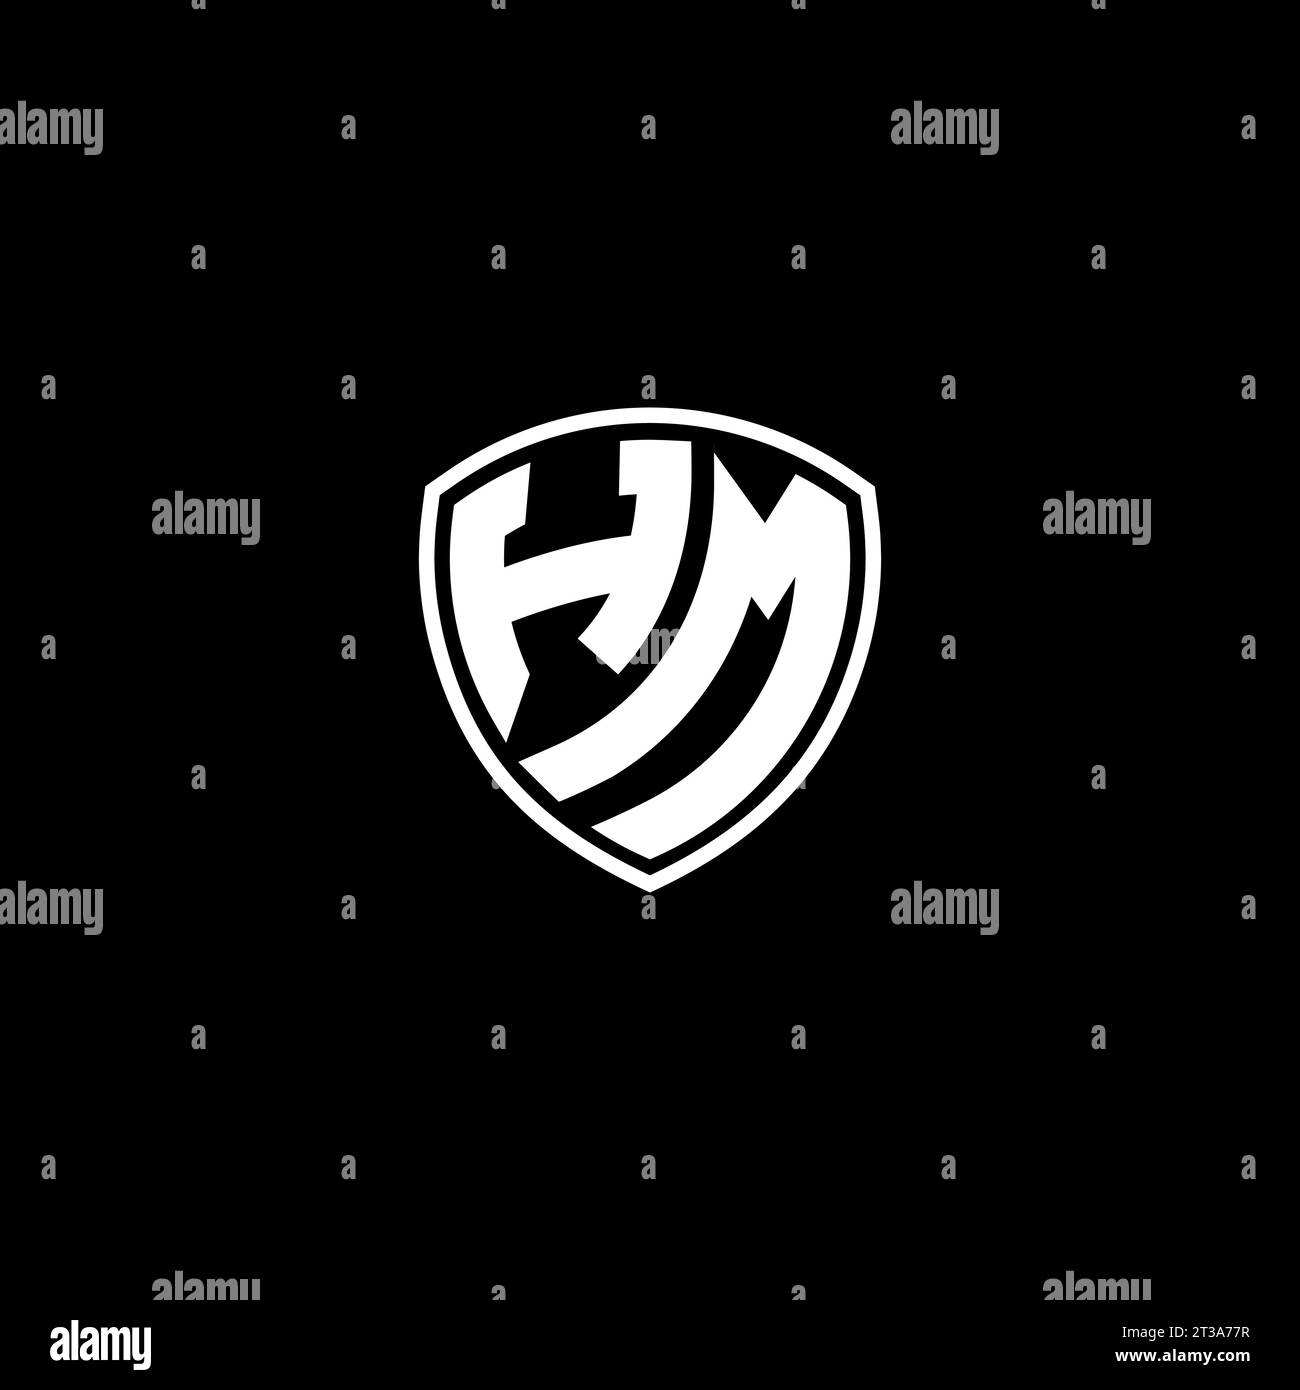 HM logo monogram emblem style with shield shape design template ideas Stock Vector